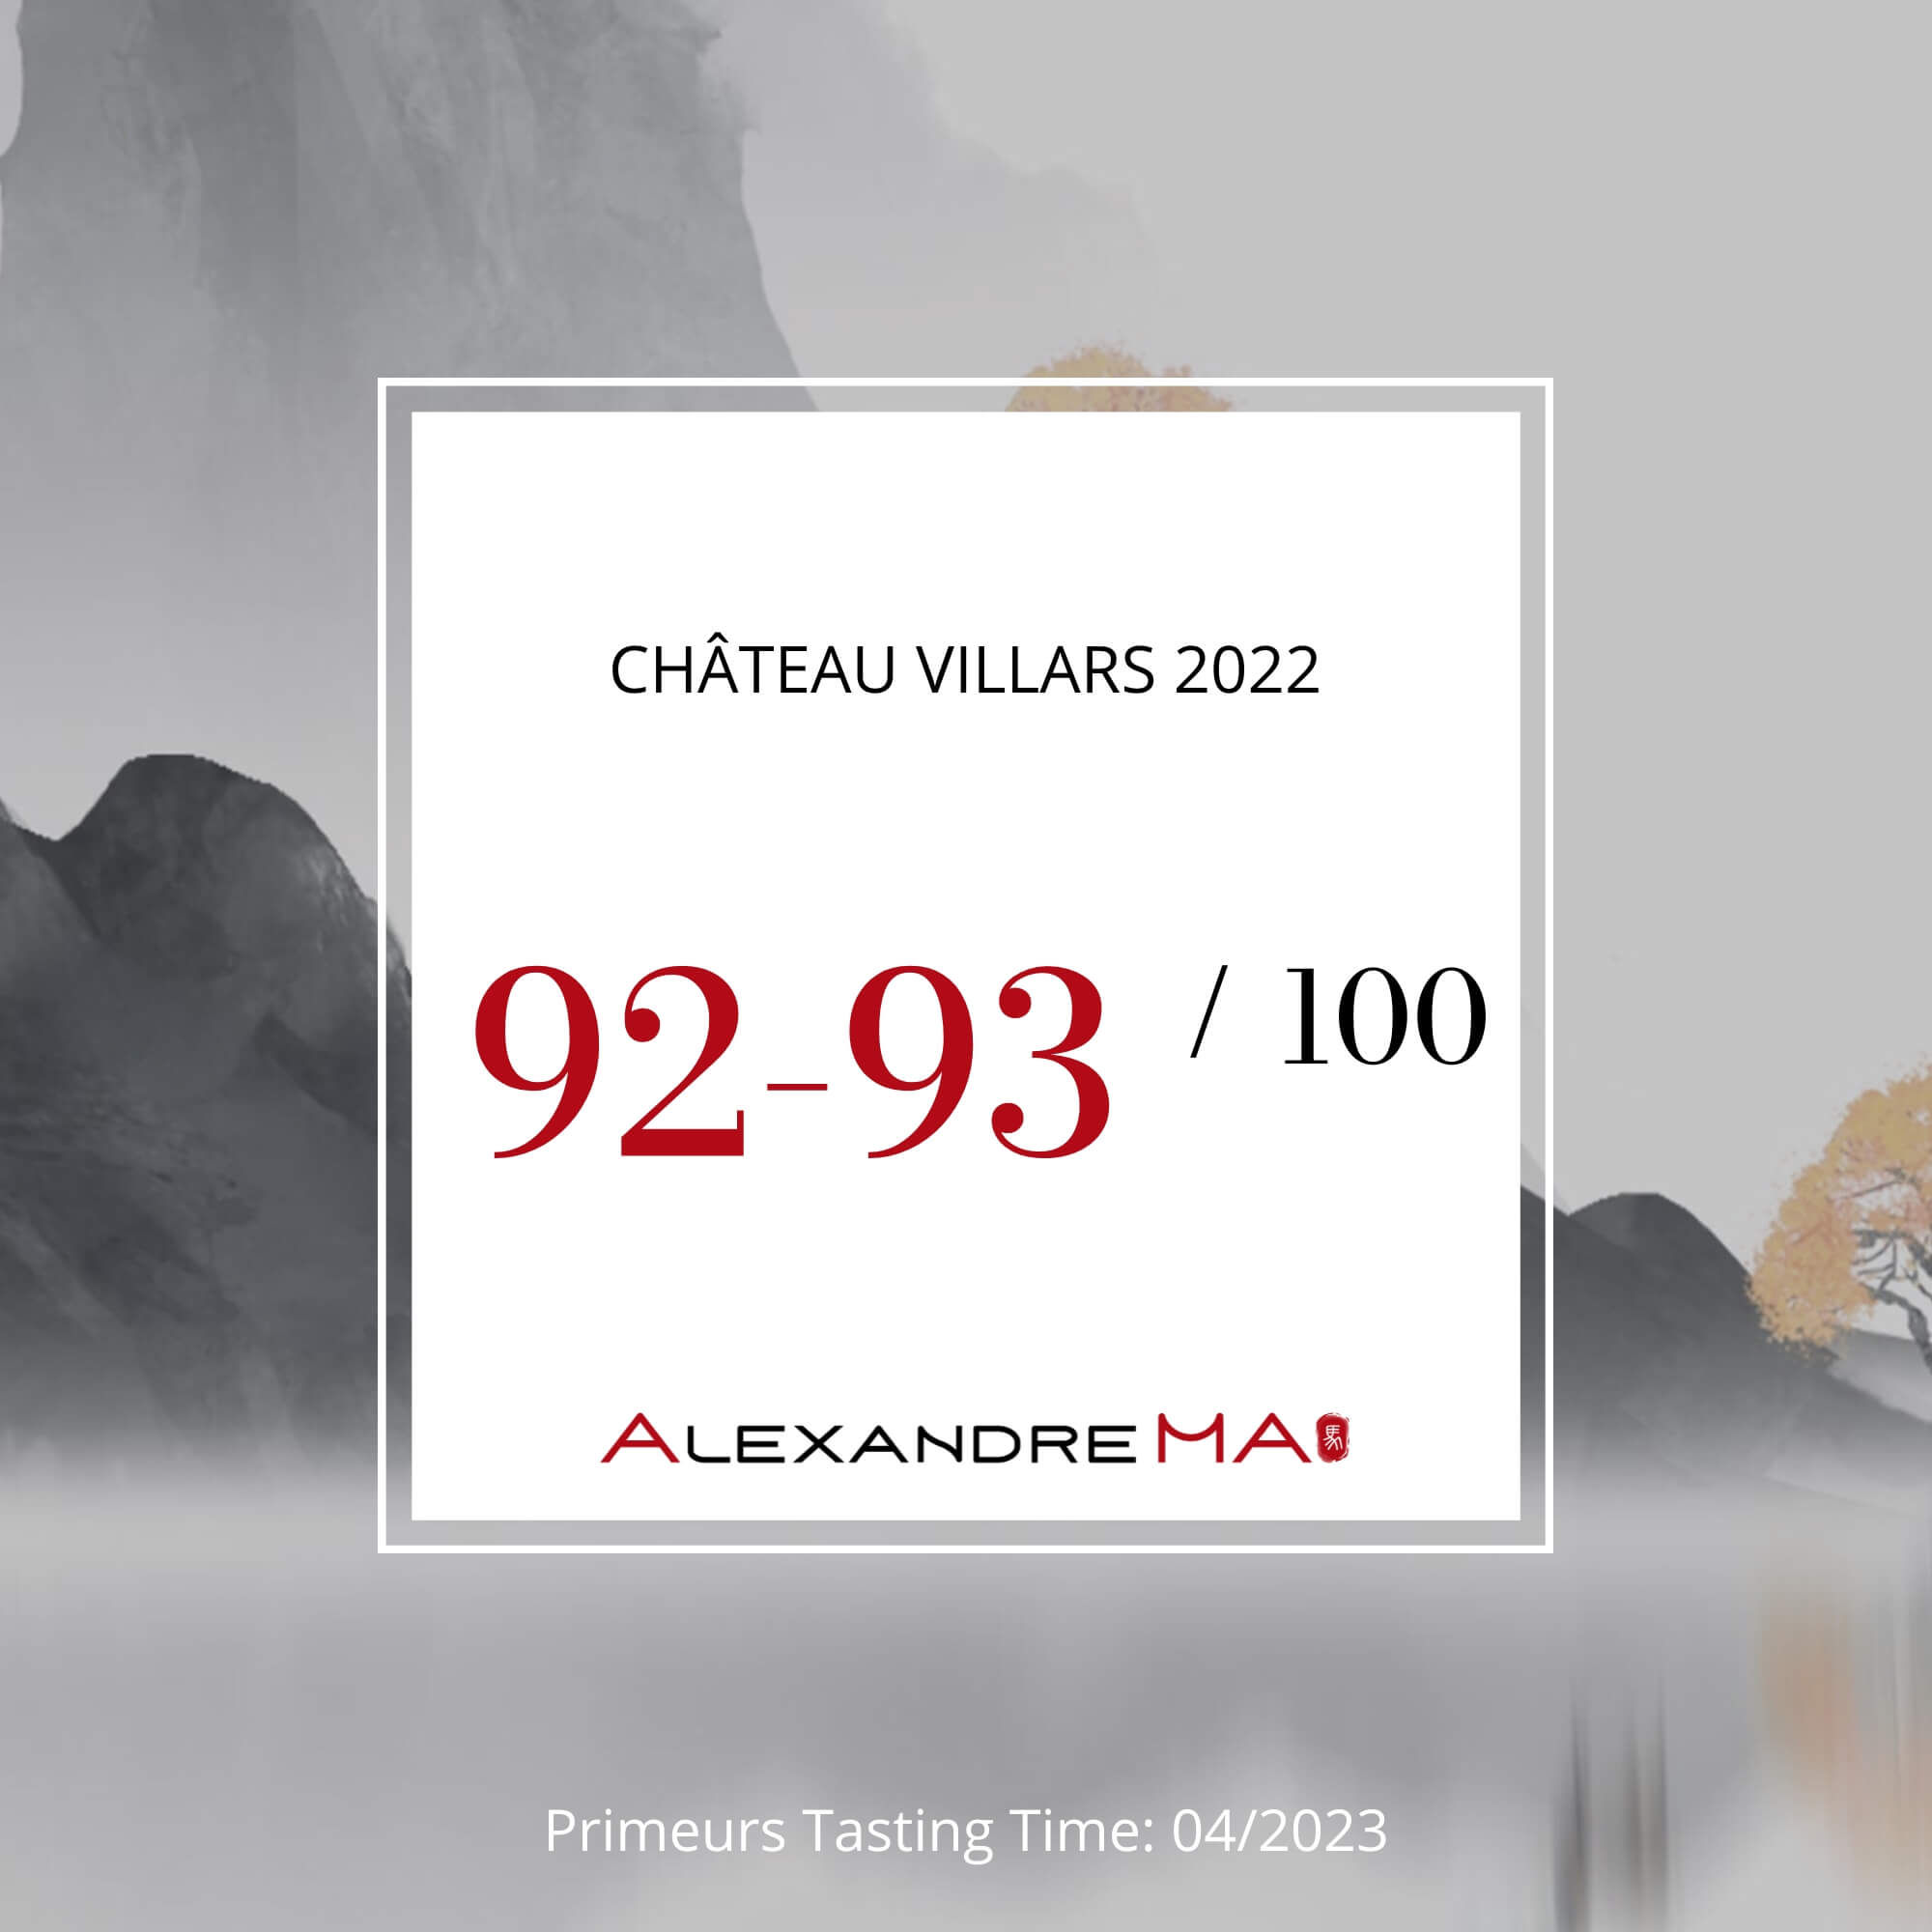 Château Villars 2022 Primeurs - Alexandre MA